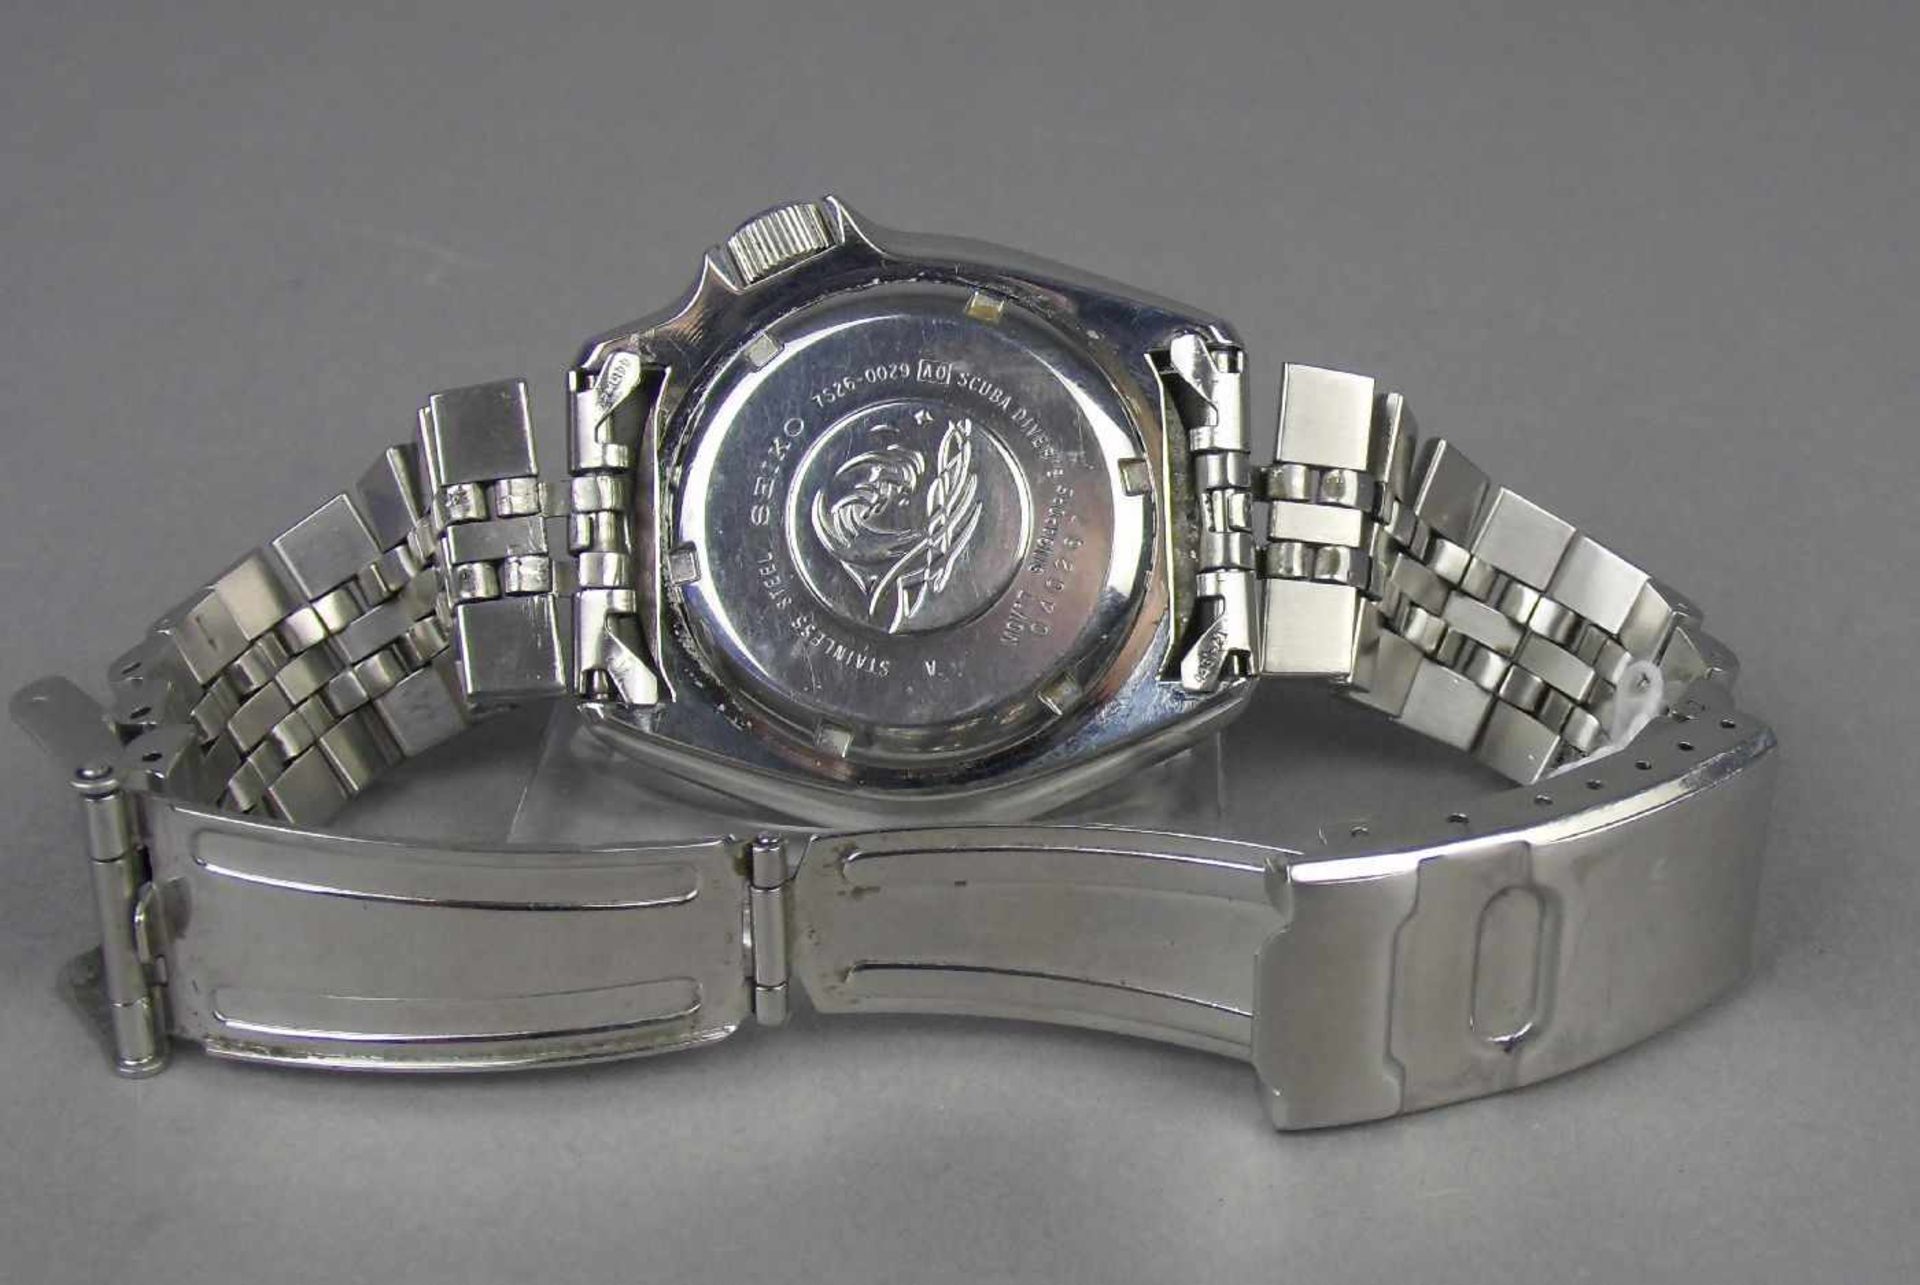 ARMBANDUHR / TAUCHERUHR: SEIKO - 7S26 - 112X R 2 / wristwatch, Automatik-Uhr, Japan, Stahlgehäuse - Image 5 of 5